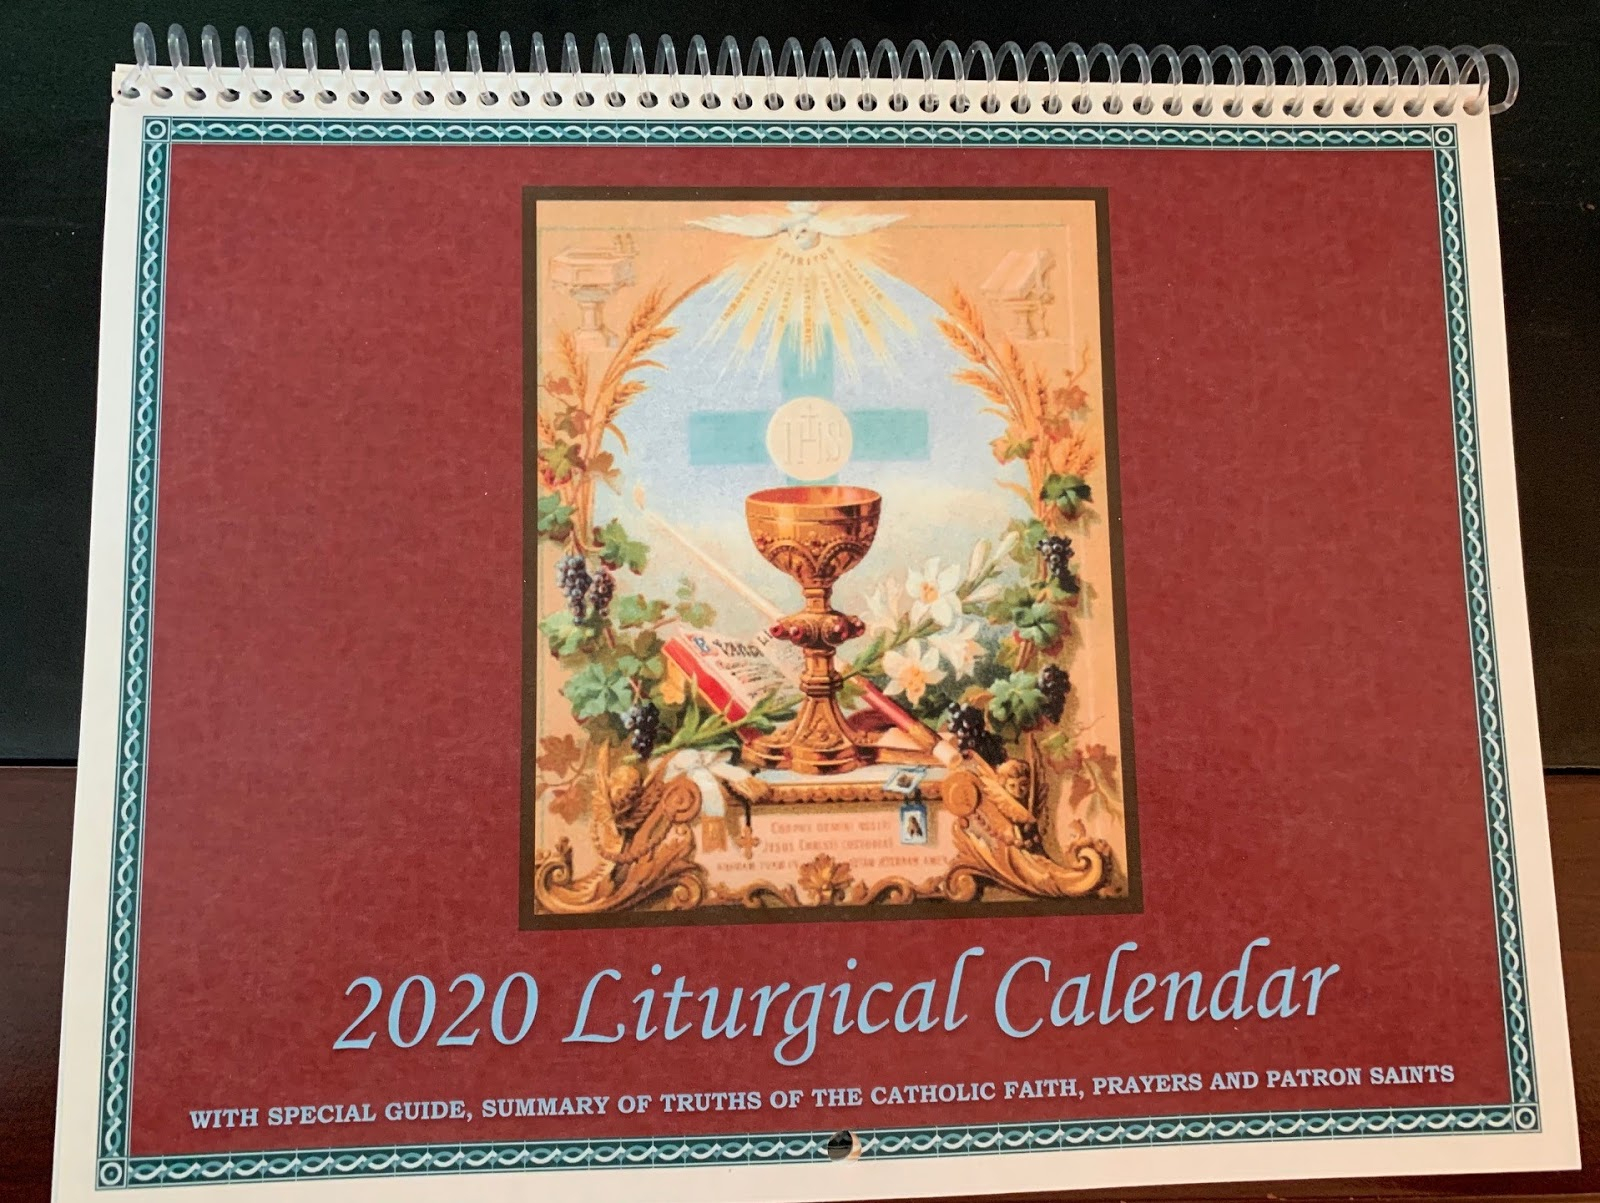 Rorate Cæli: 2020 Liturgical Calendar Season Begins intended for Catholic Liturgy Calendar 2020